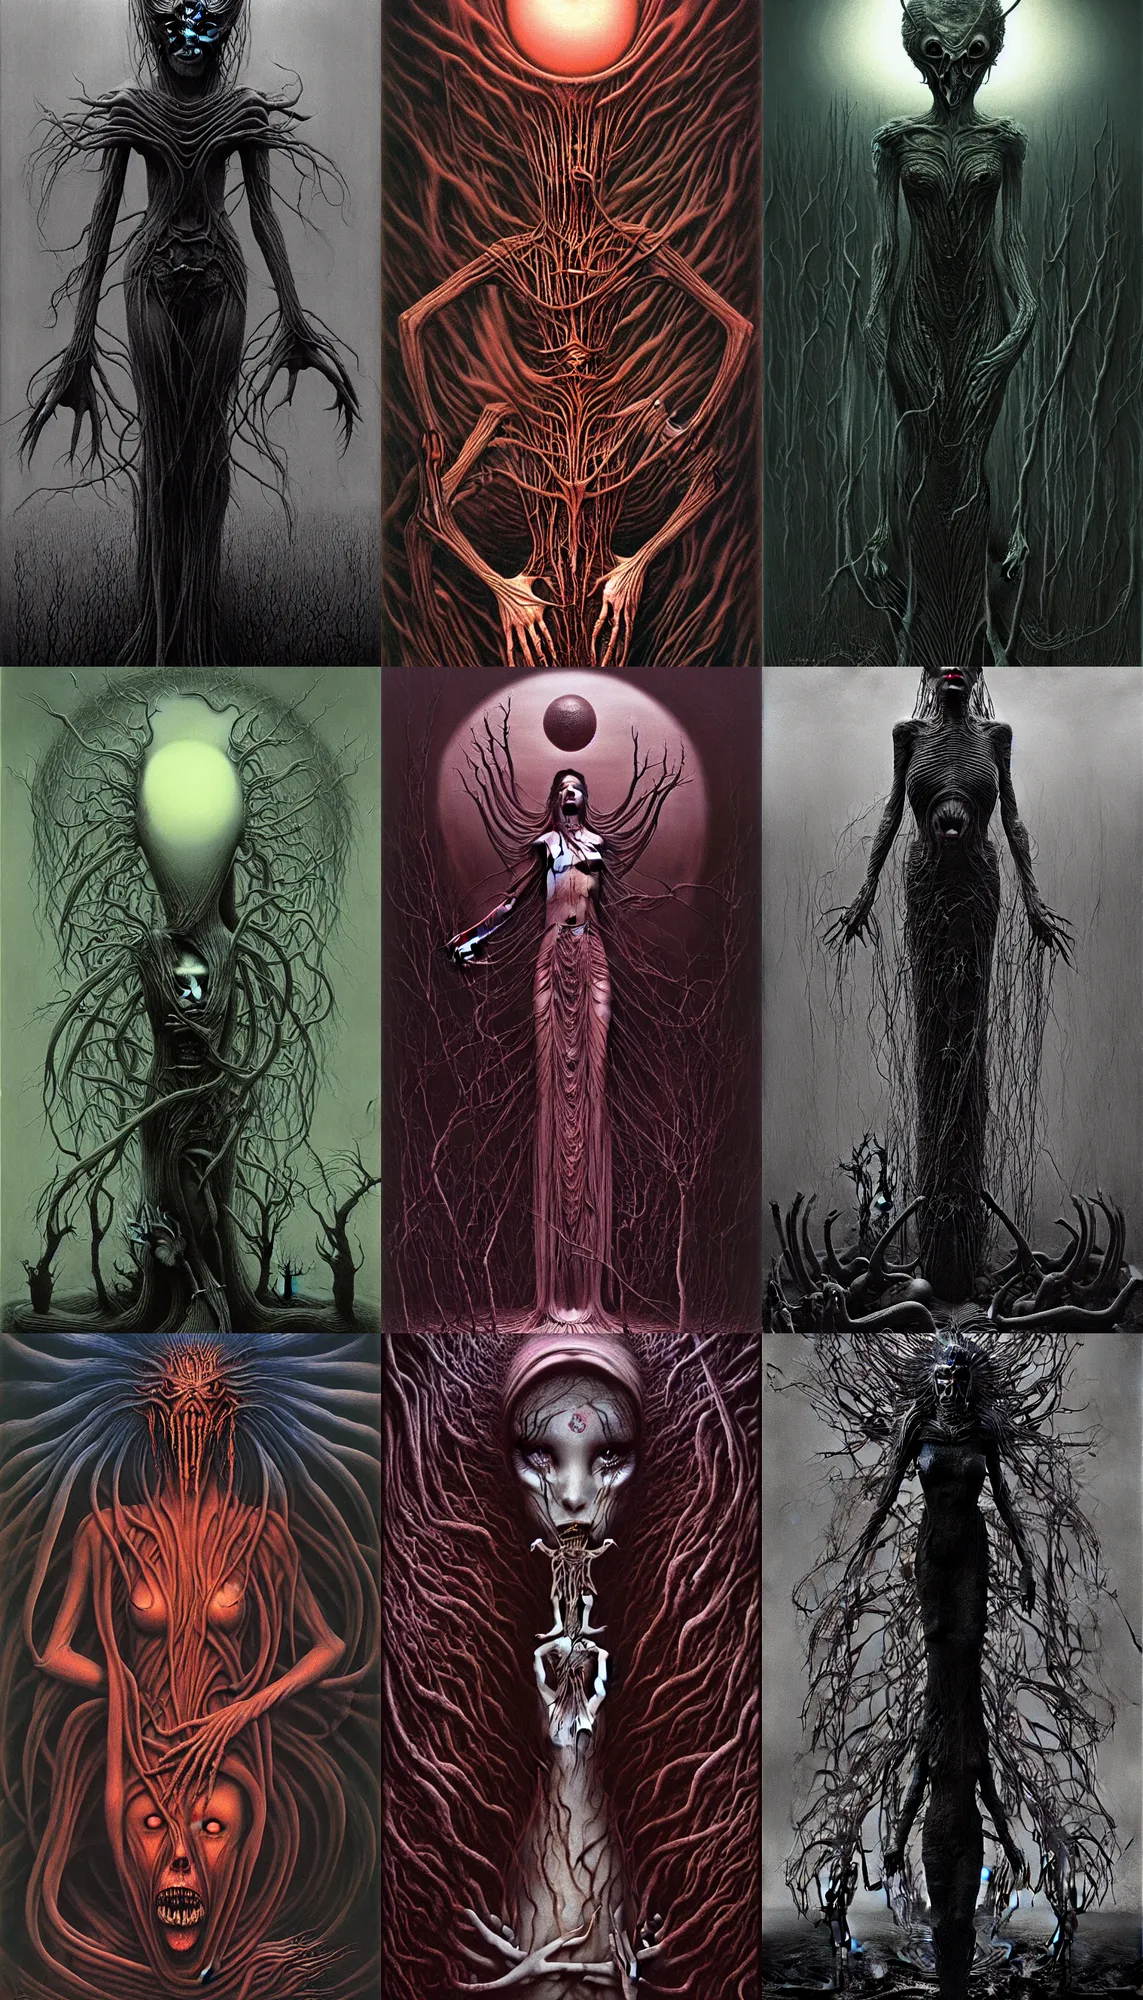 Prompt: princess of the primordial darkness by Zdzisław Beksiński, Junji Ito, H.R. Giger, horror art, surreal art, cinematic, 4K